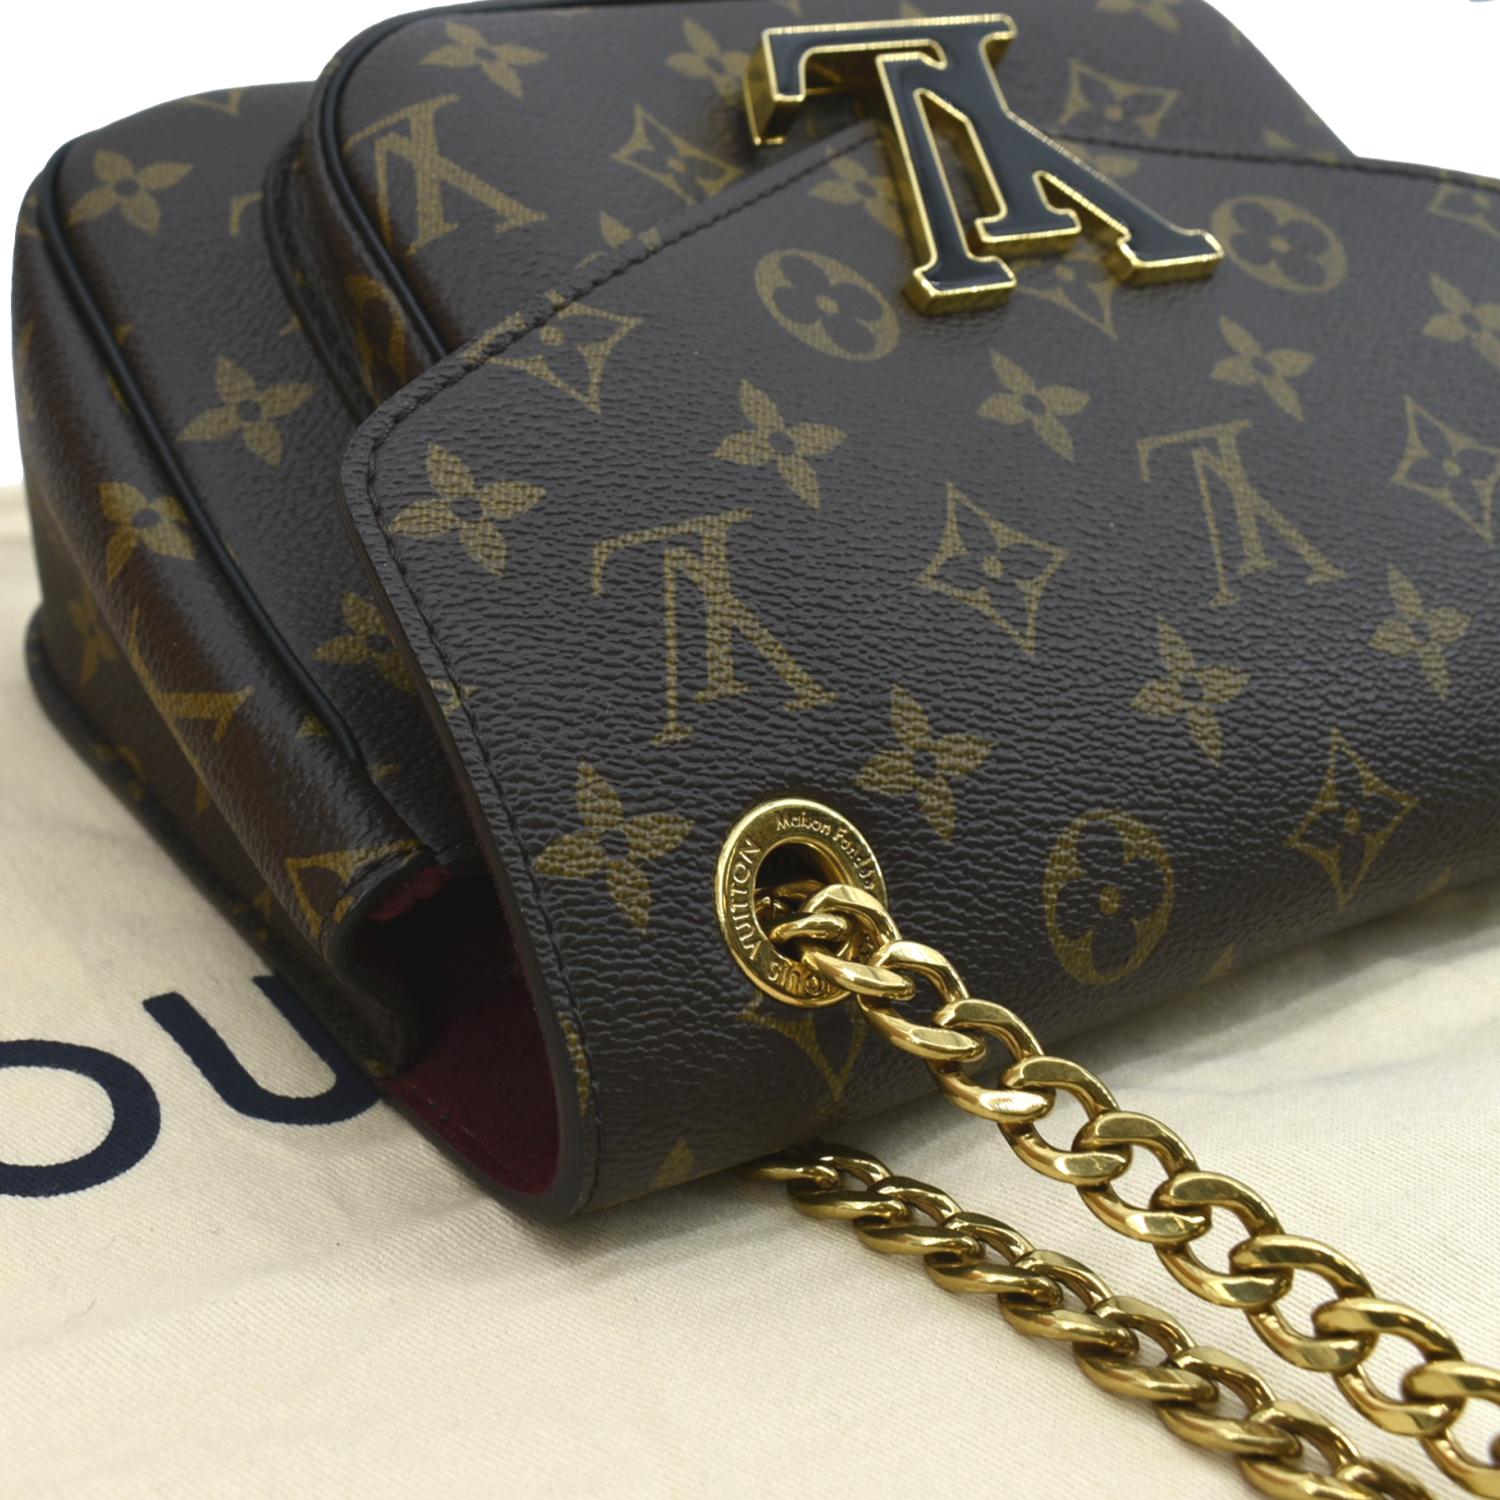 Louis Vuitton Monogram Canvas Passy Bag